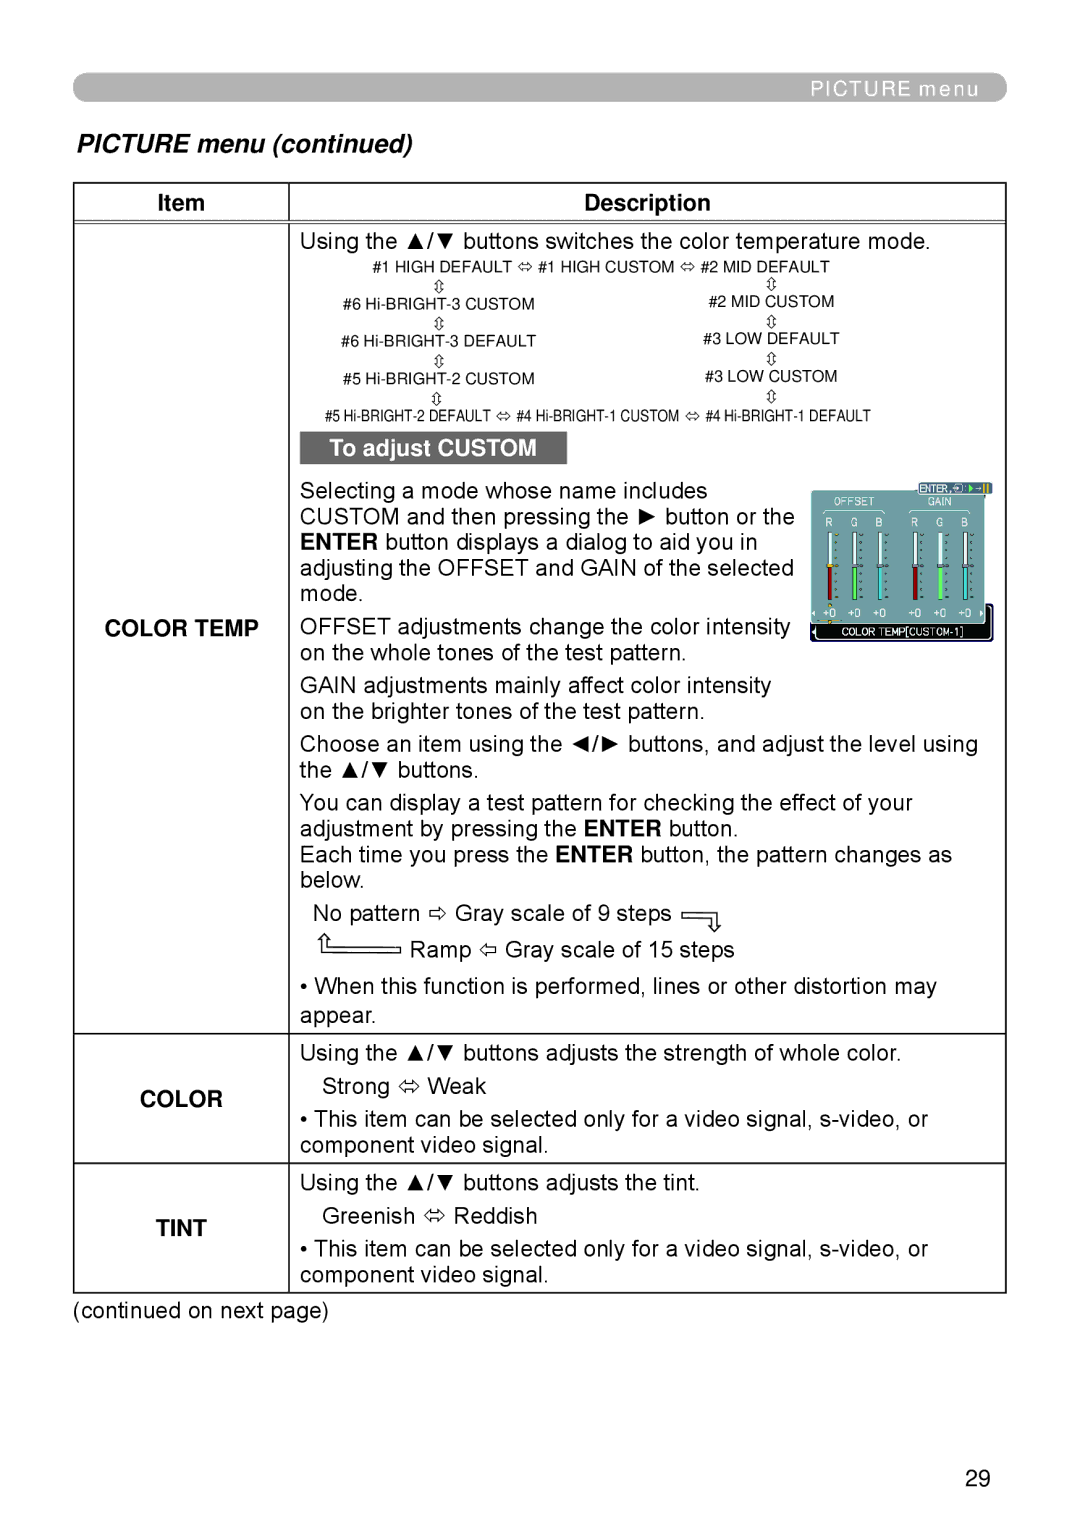 Apple ED-A101, ED-A111 manual Picture menu, Color Temp 